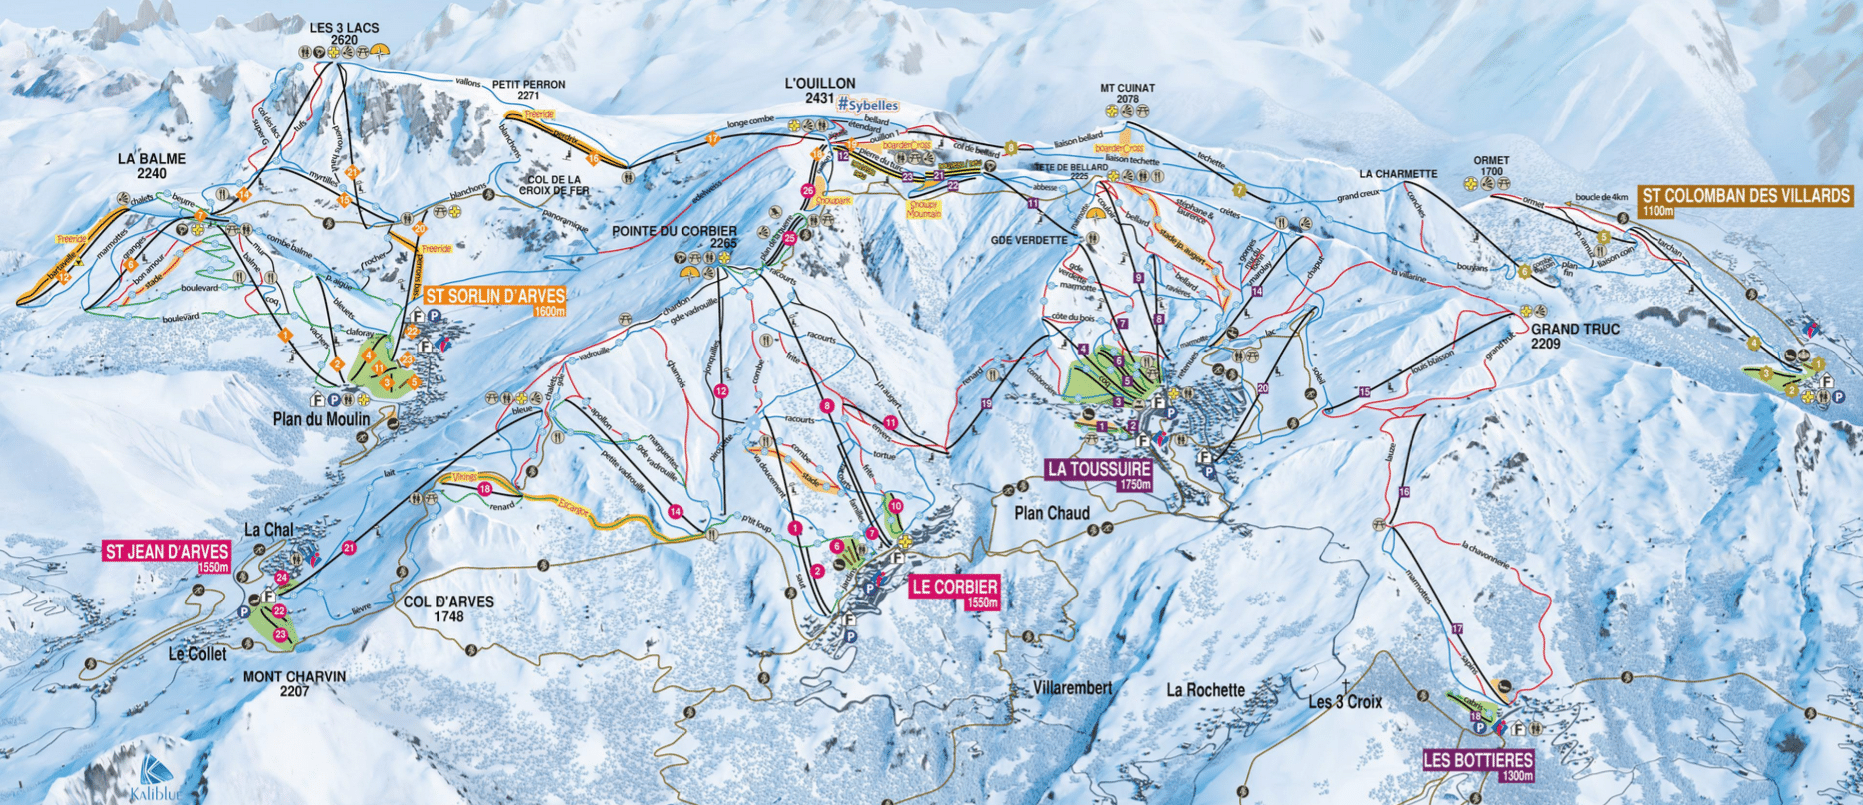 Les sybelles - Ski slopes map